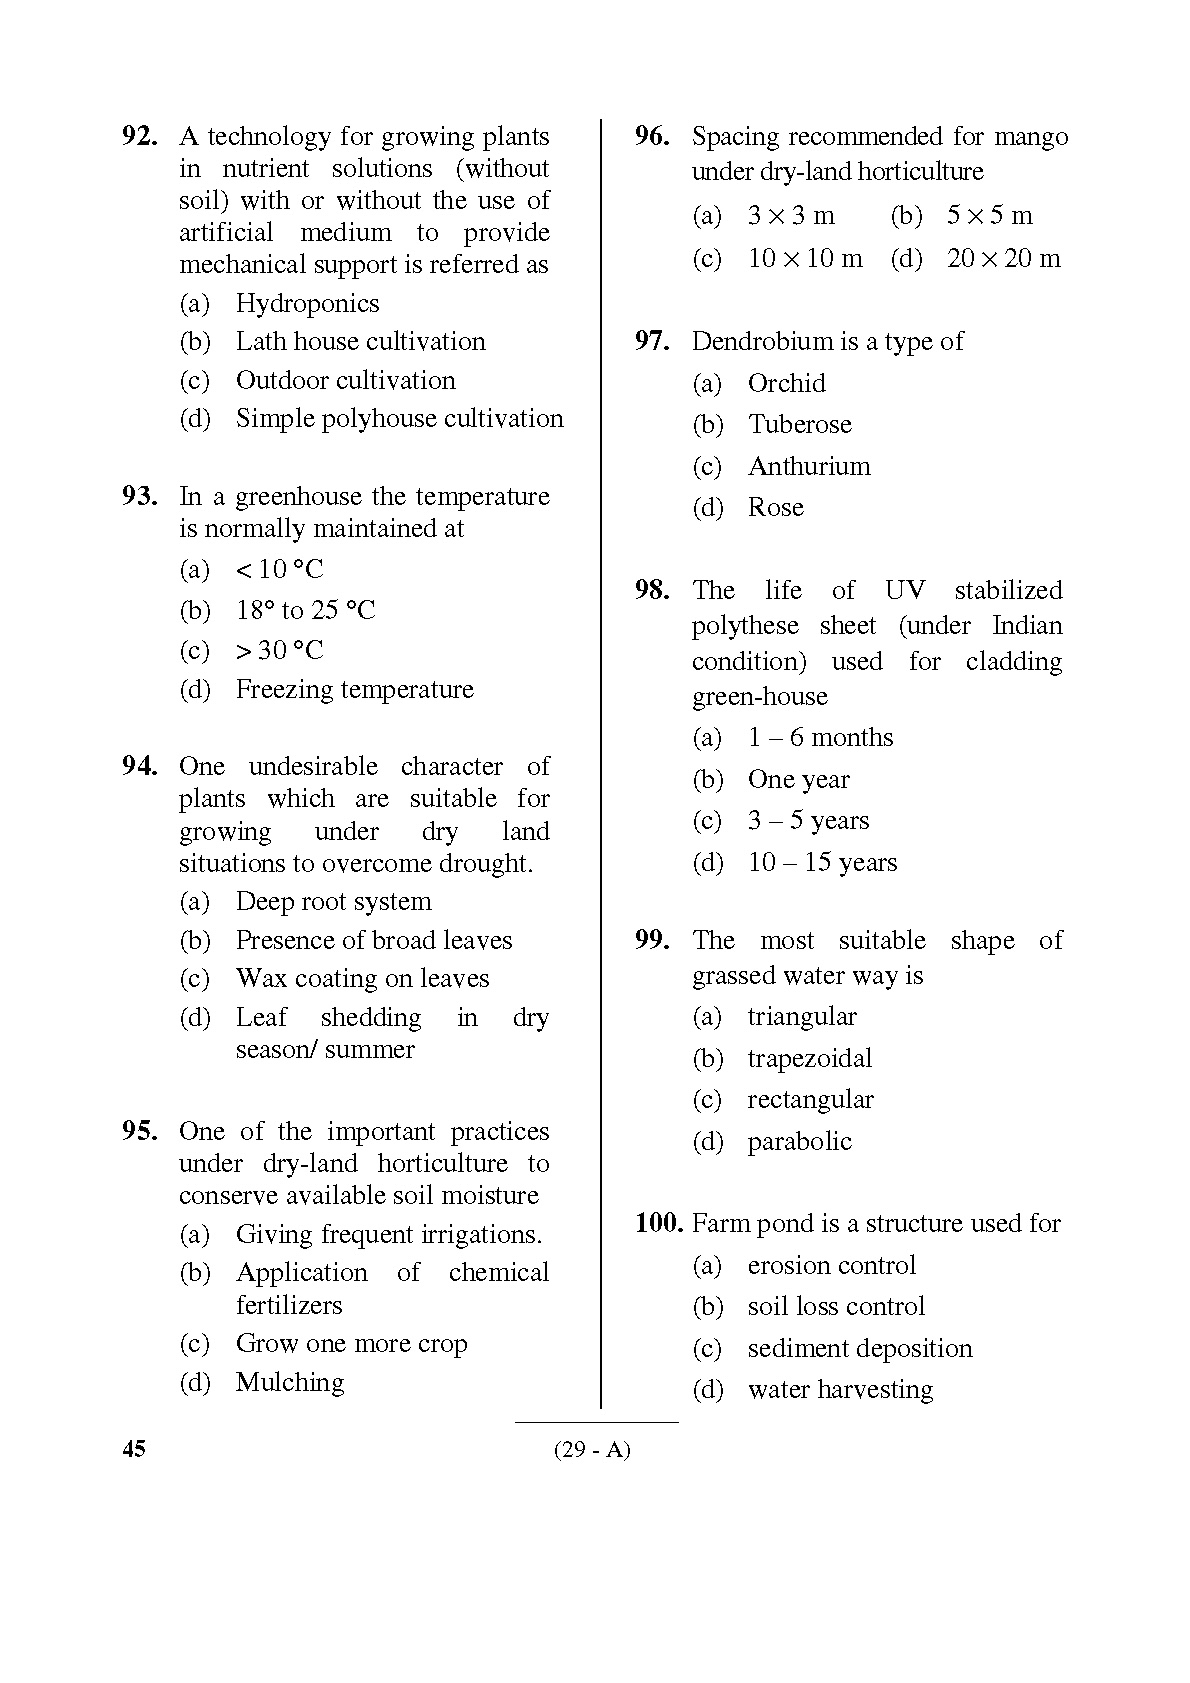 Karnataka PSC Horticulture Assistant Exam Sample Question Paper 29